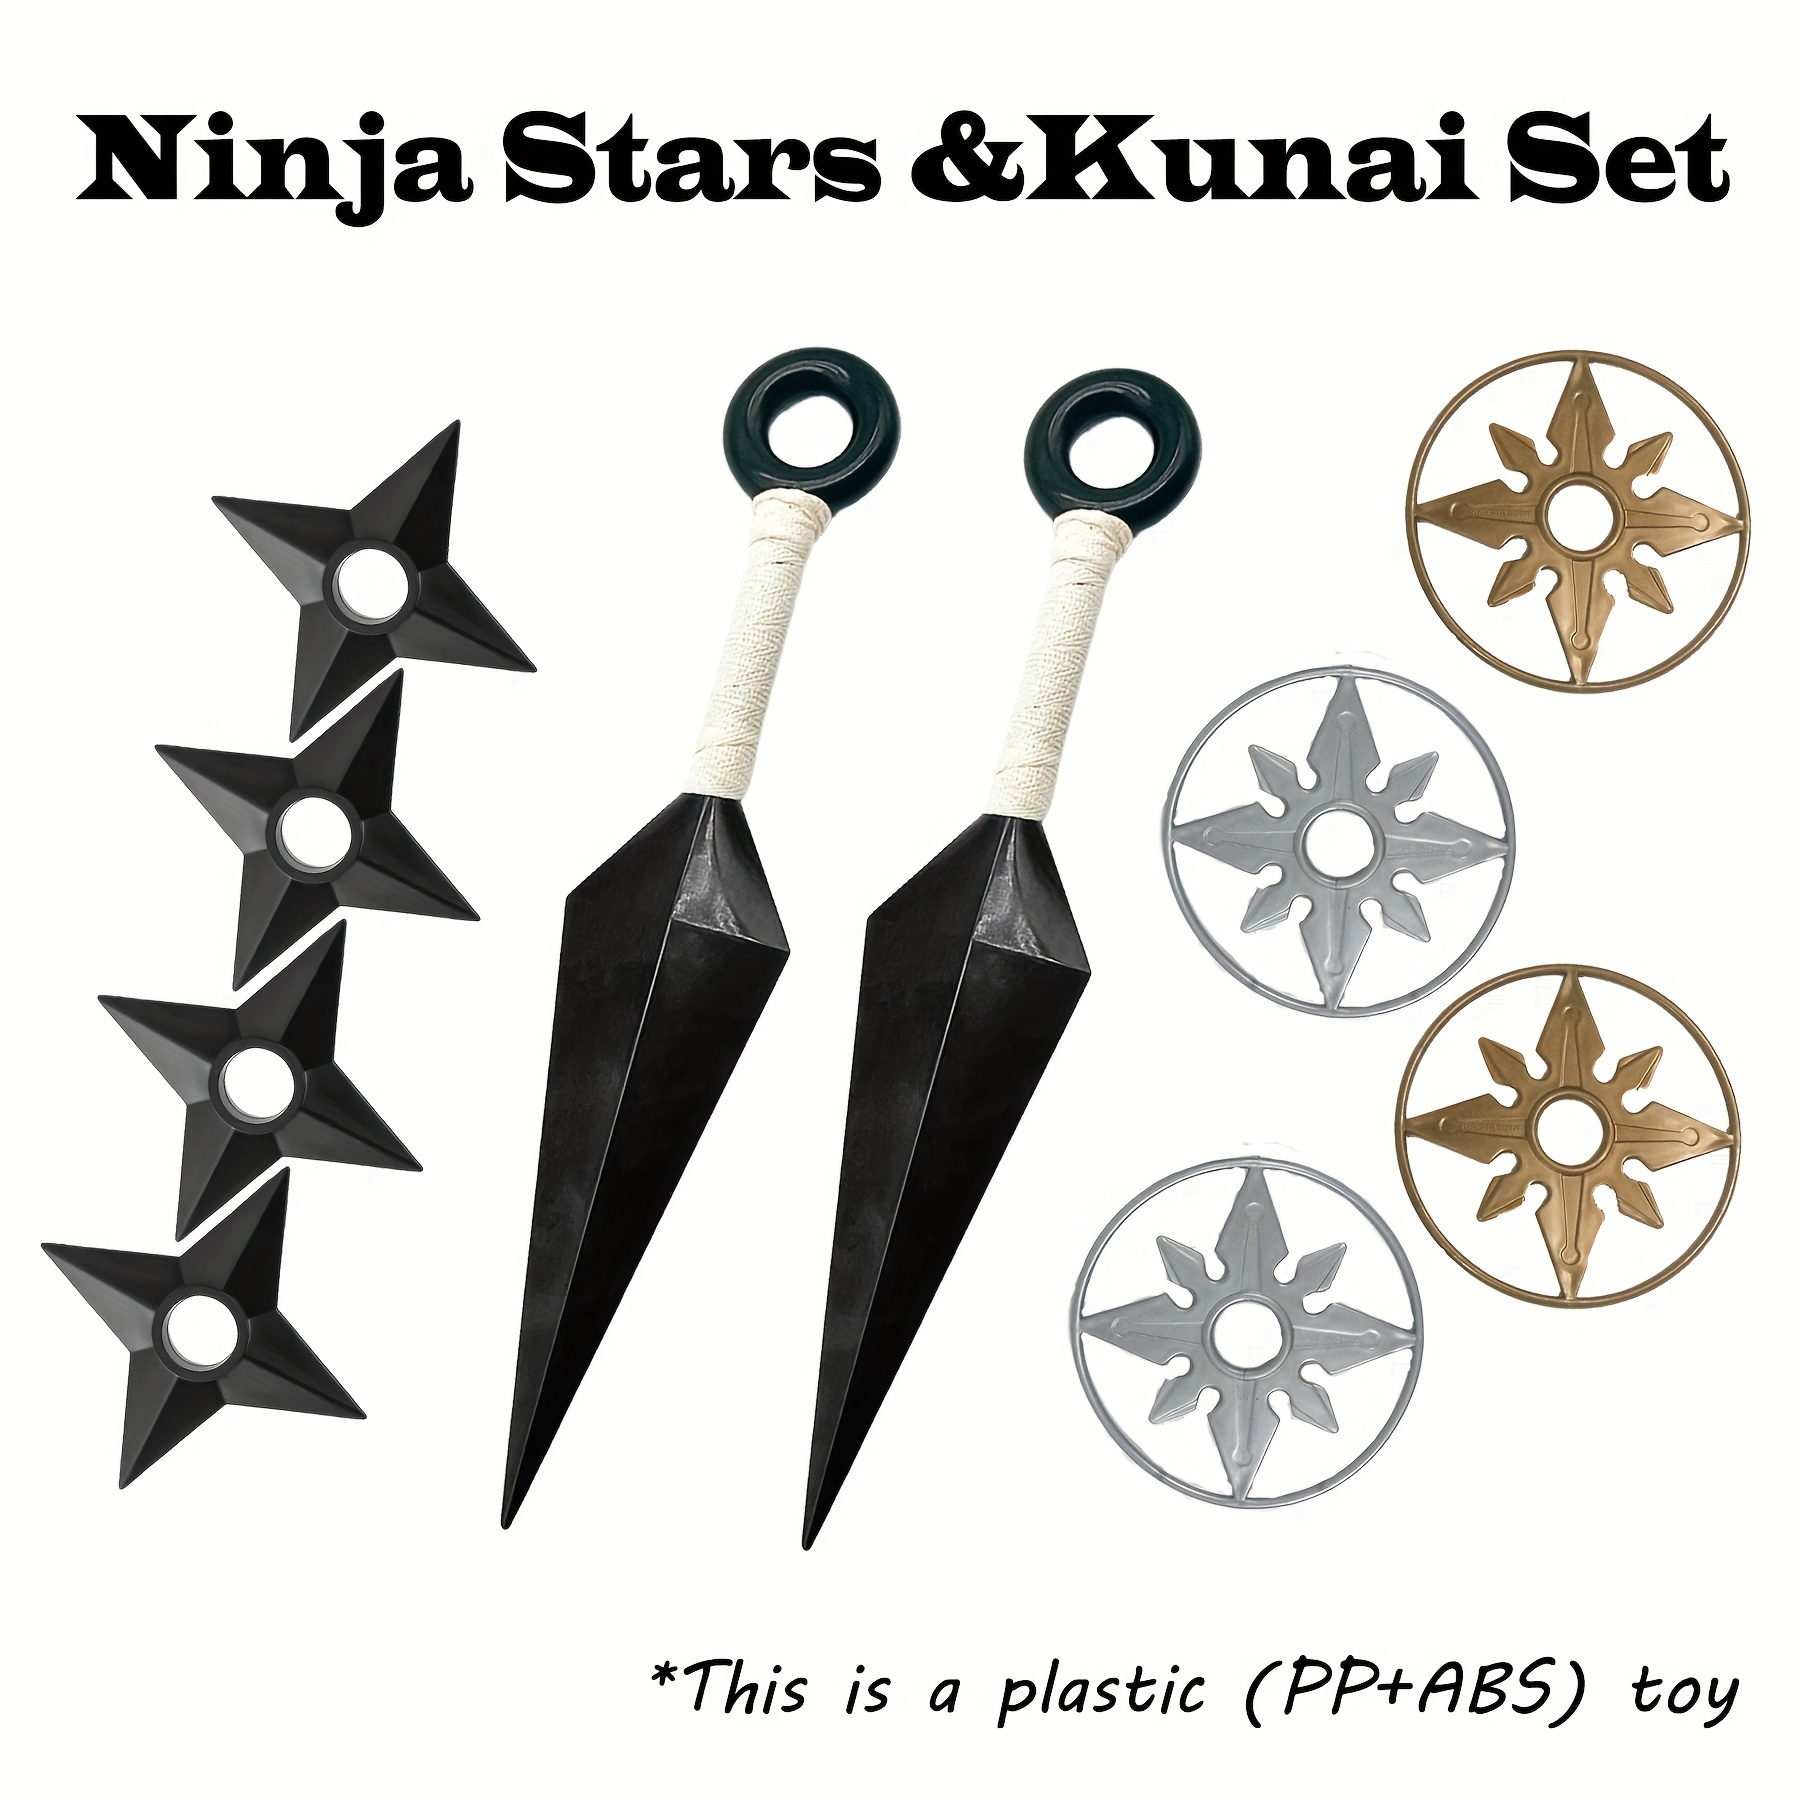 Naruto Anime 26cm Kunai Knife Accessory